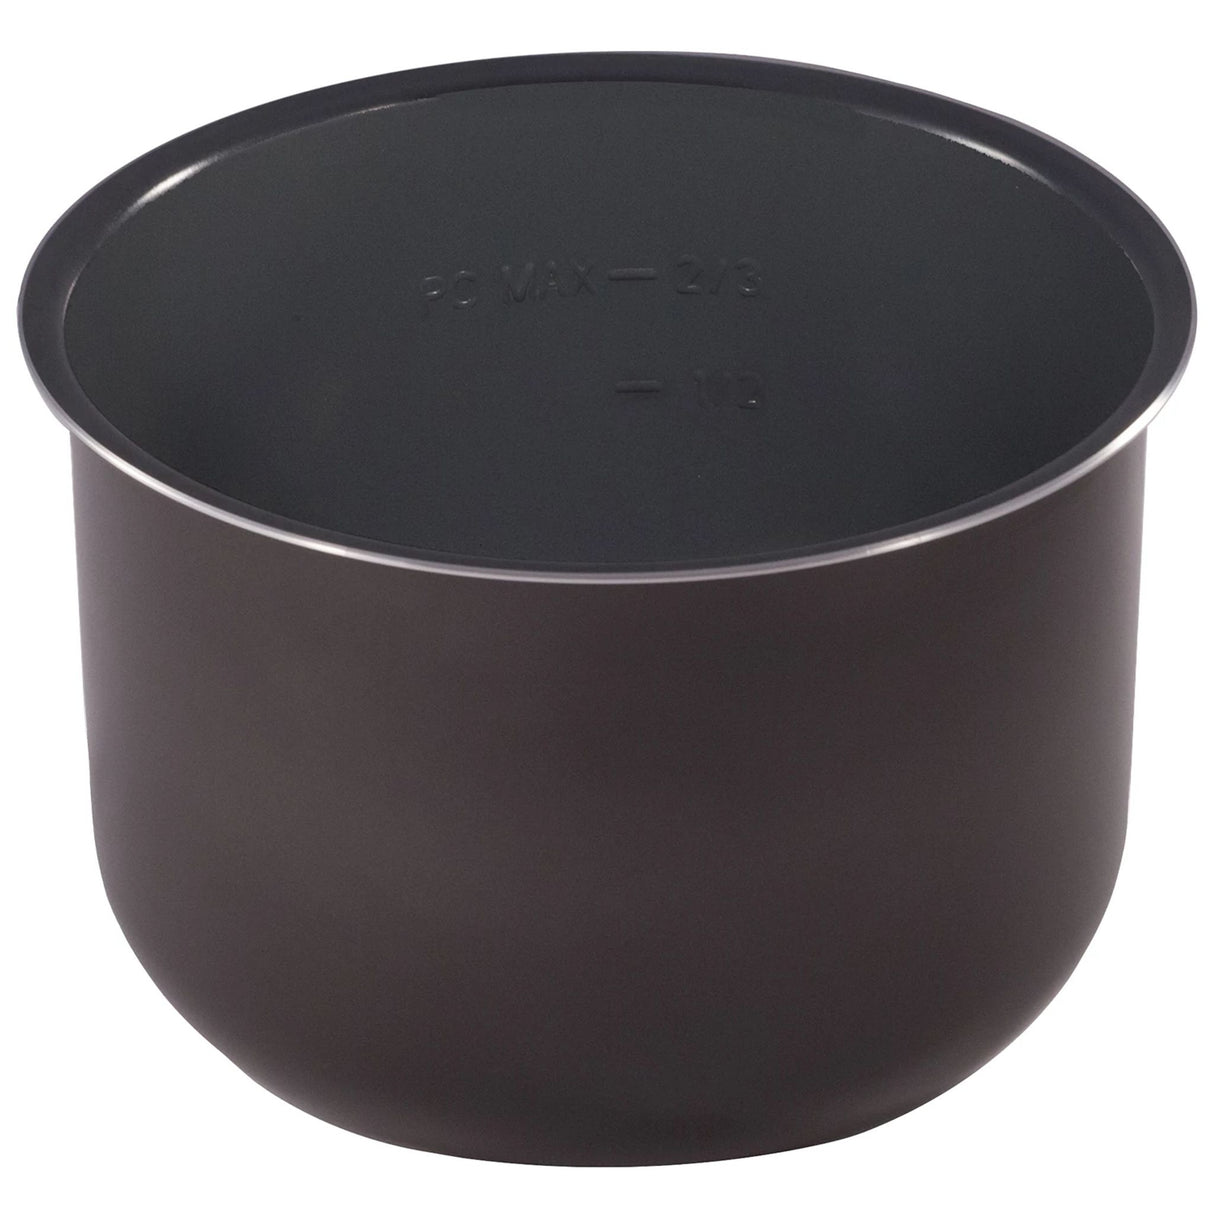  Instant Pot 6-quart Ceramic Non-Stick Inner Pot